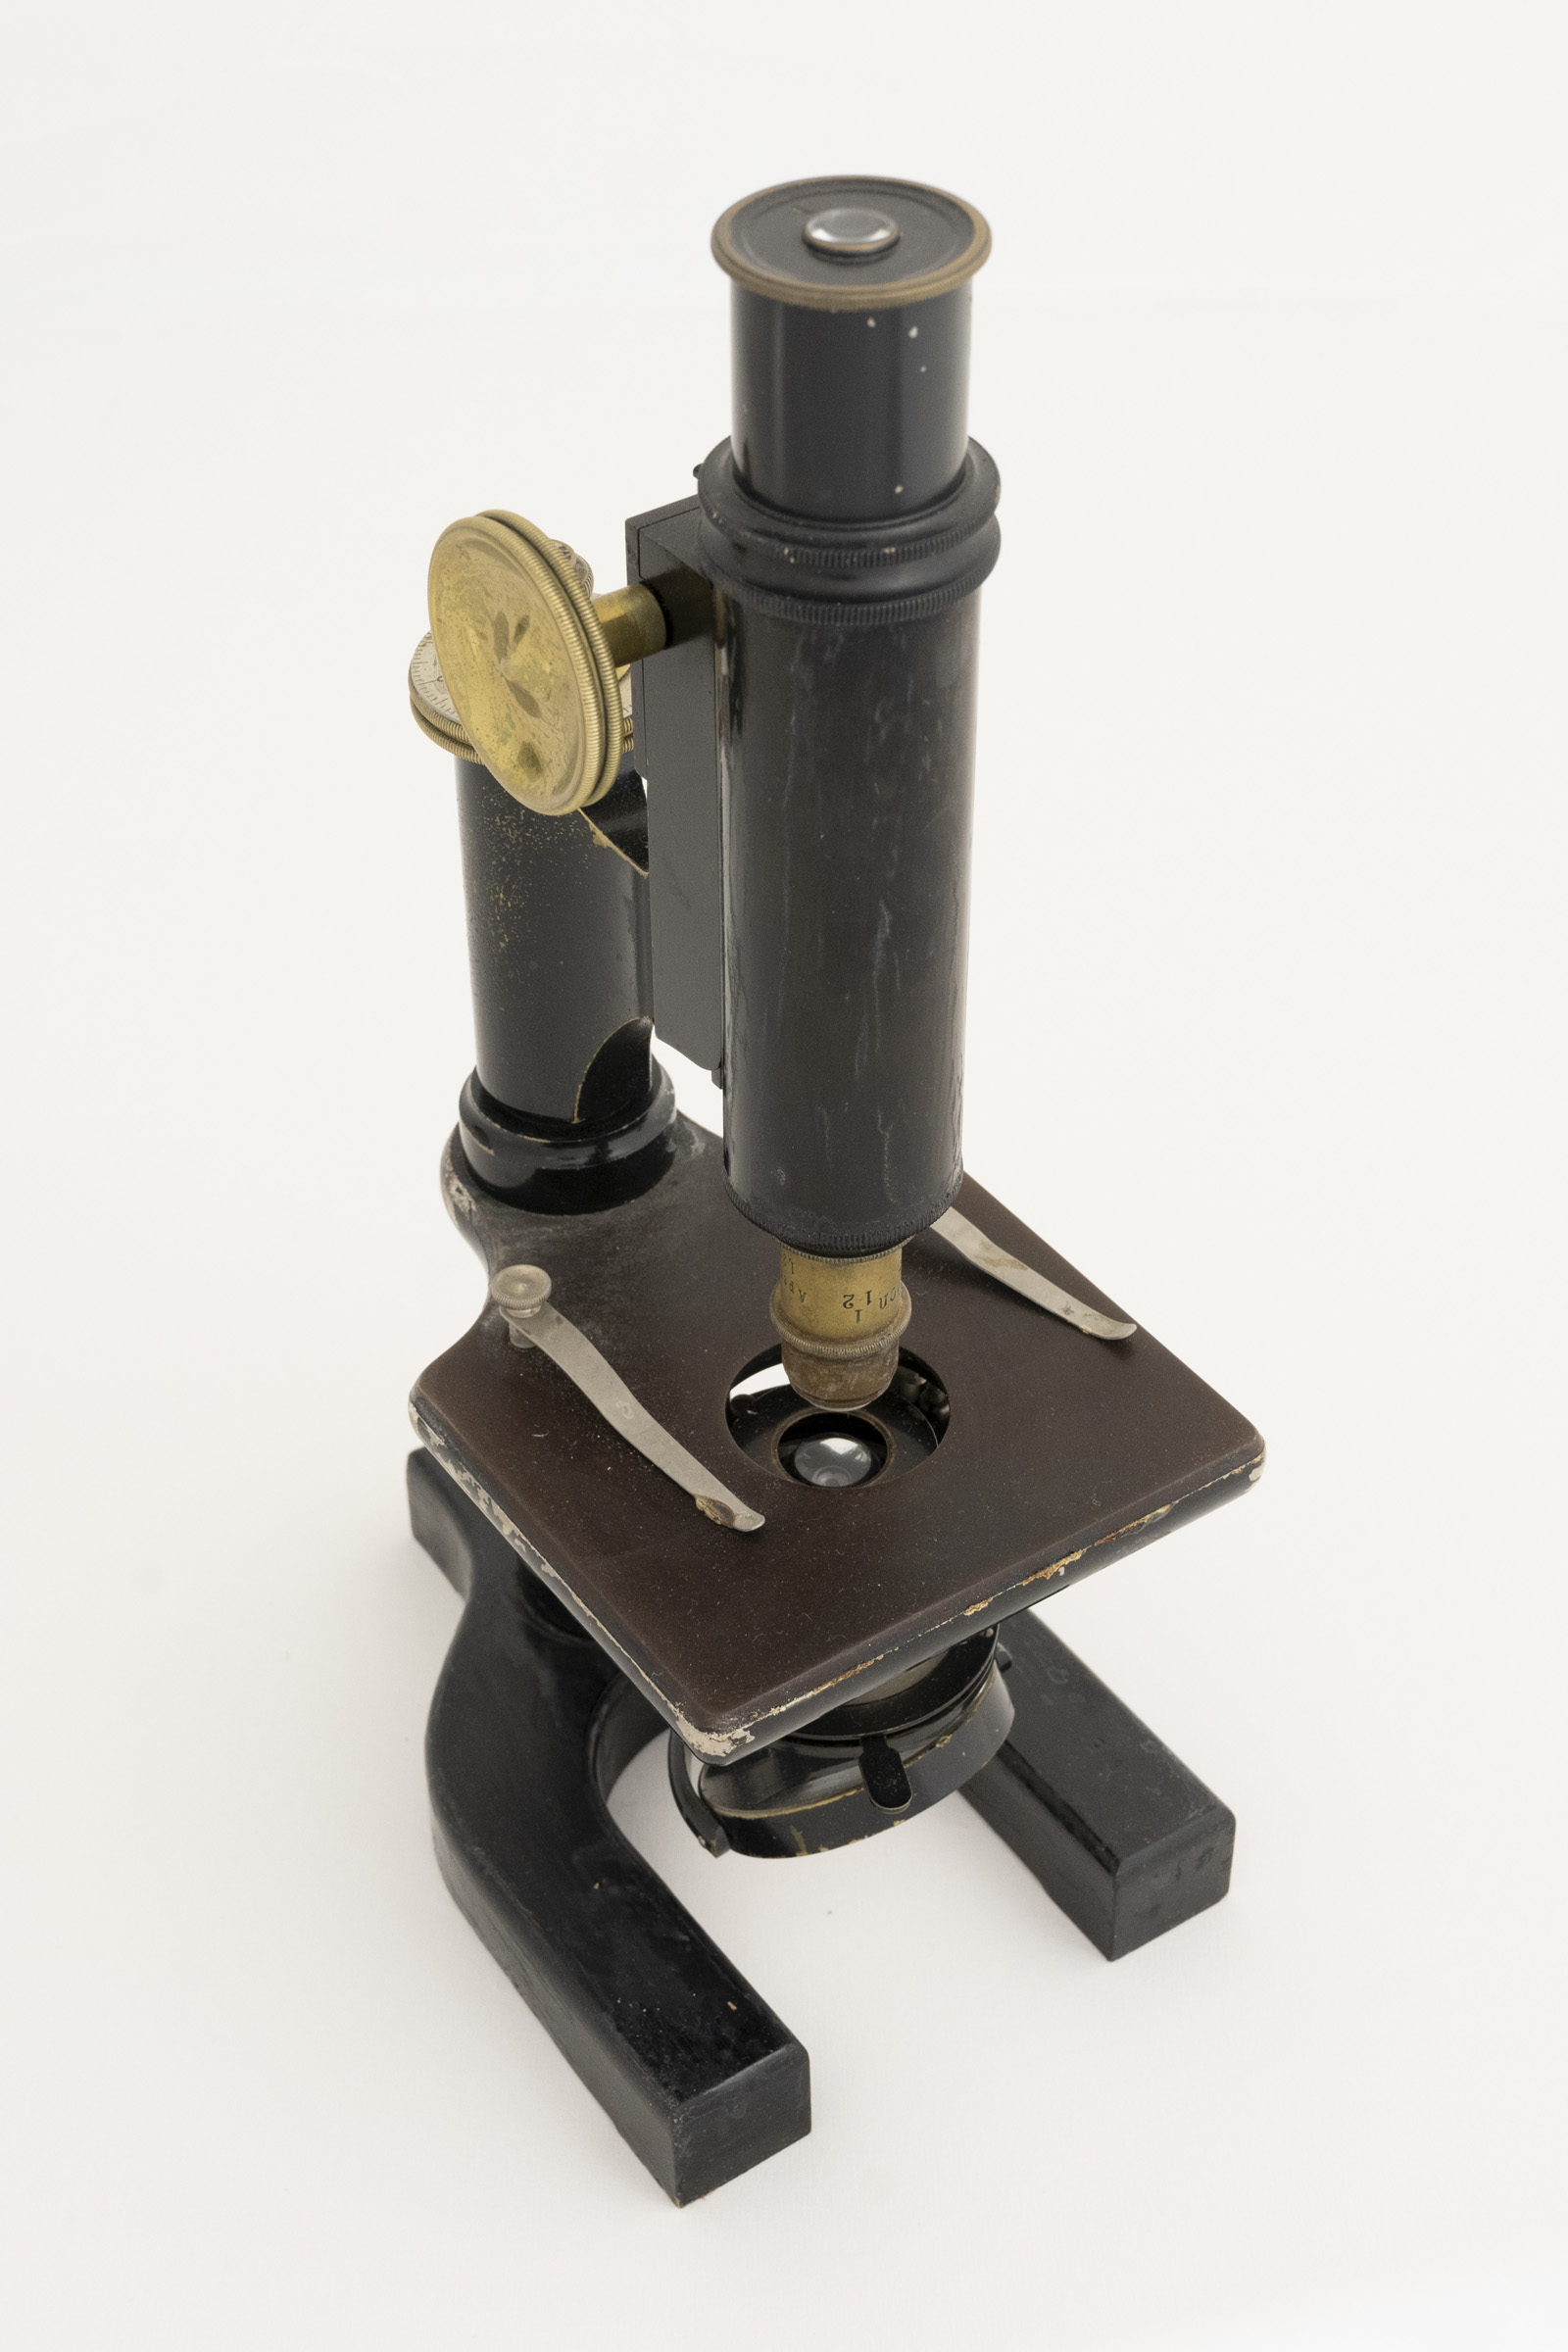 Black and brass microscope